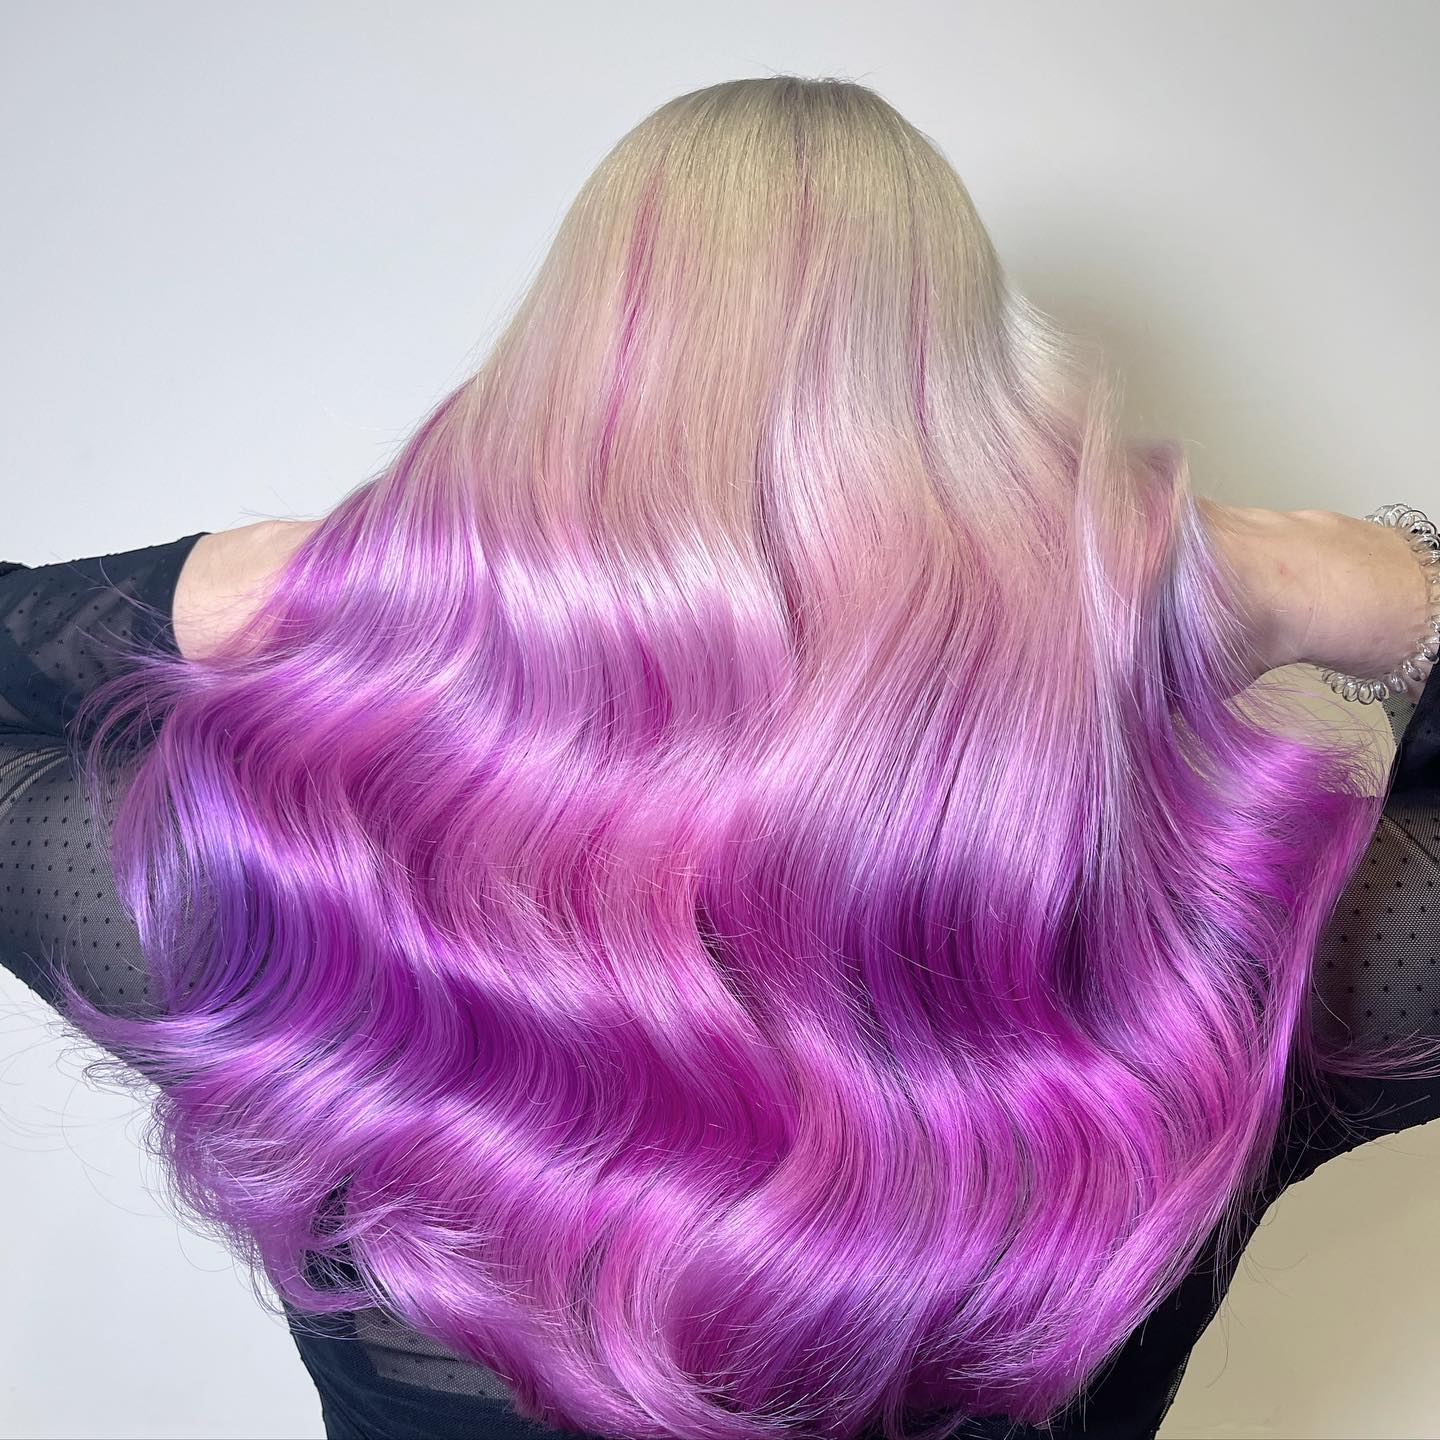 275816353 495510758645820 5467943728337325911 n - Ombré hair rosa: 60 inspirações, trends